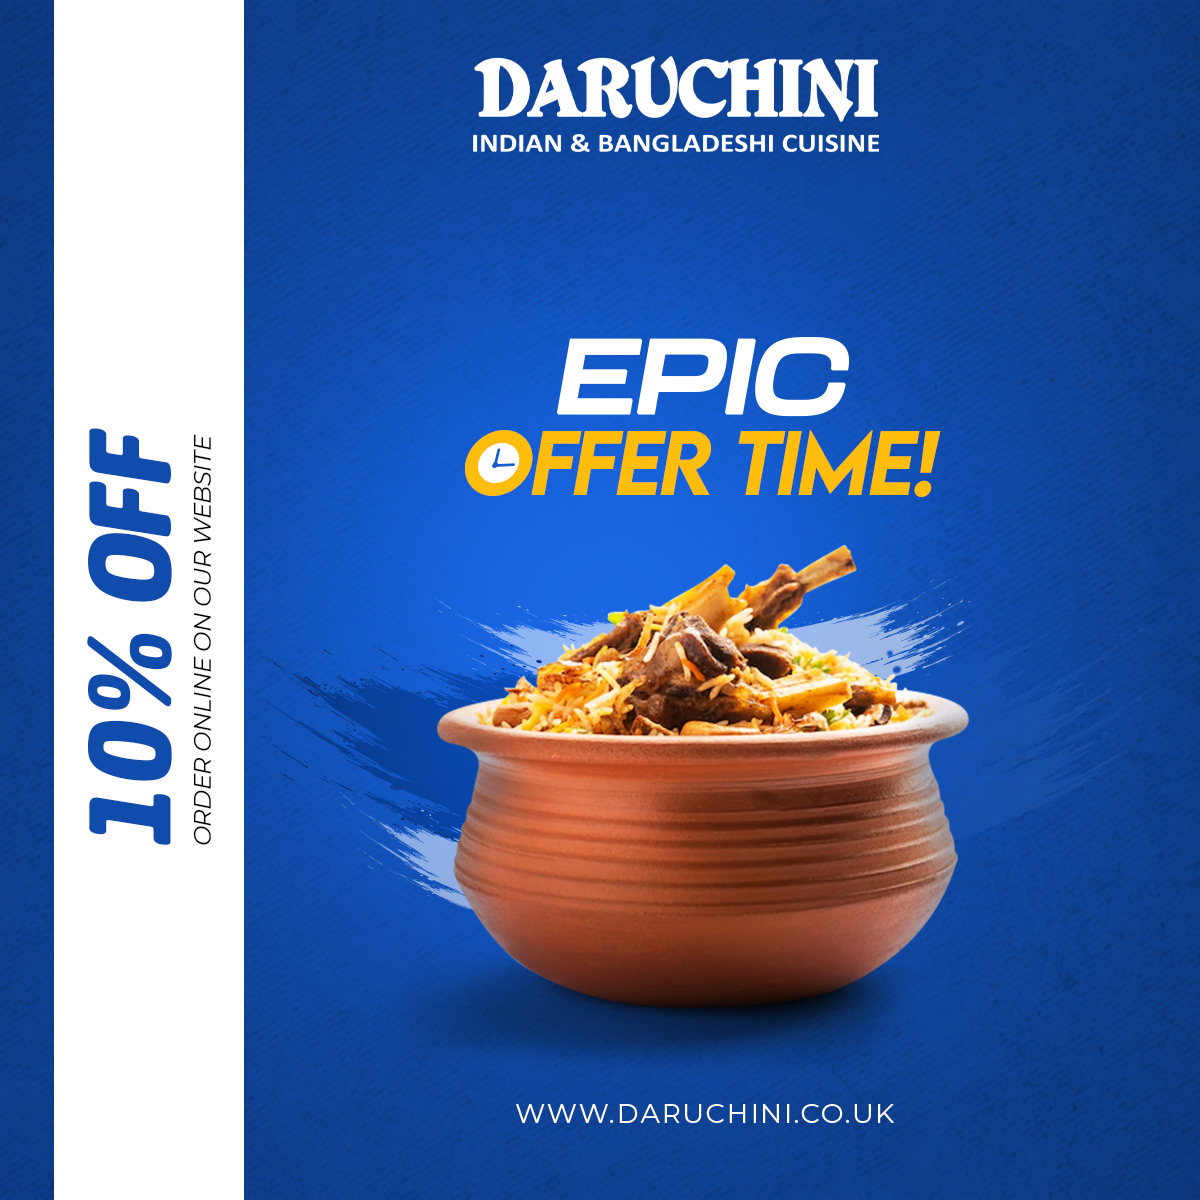 DaruChini Indian Restaurant